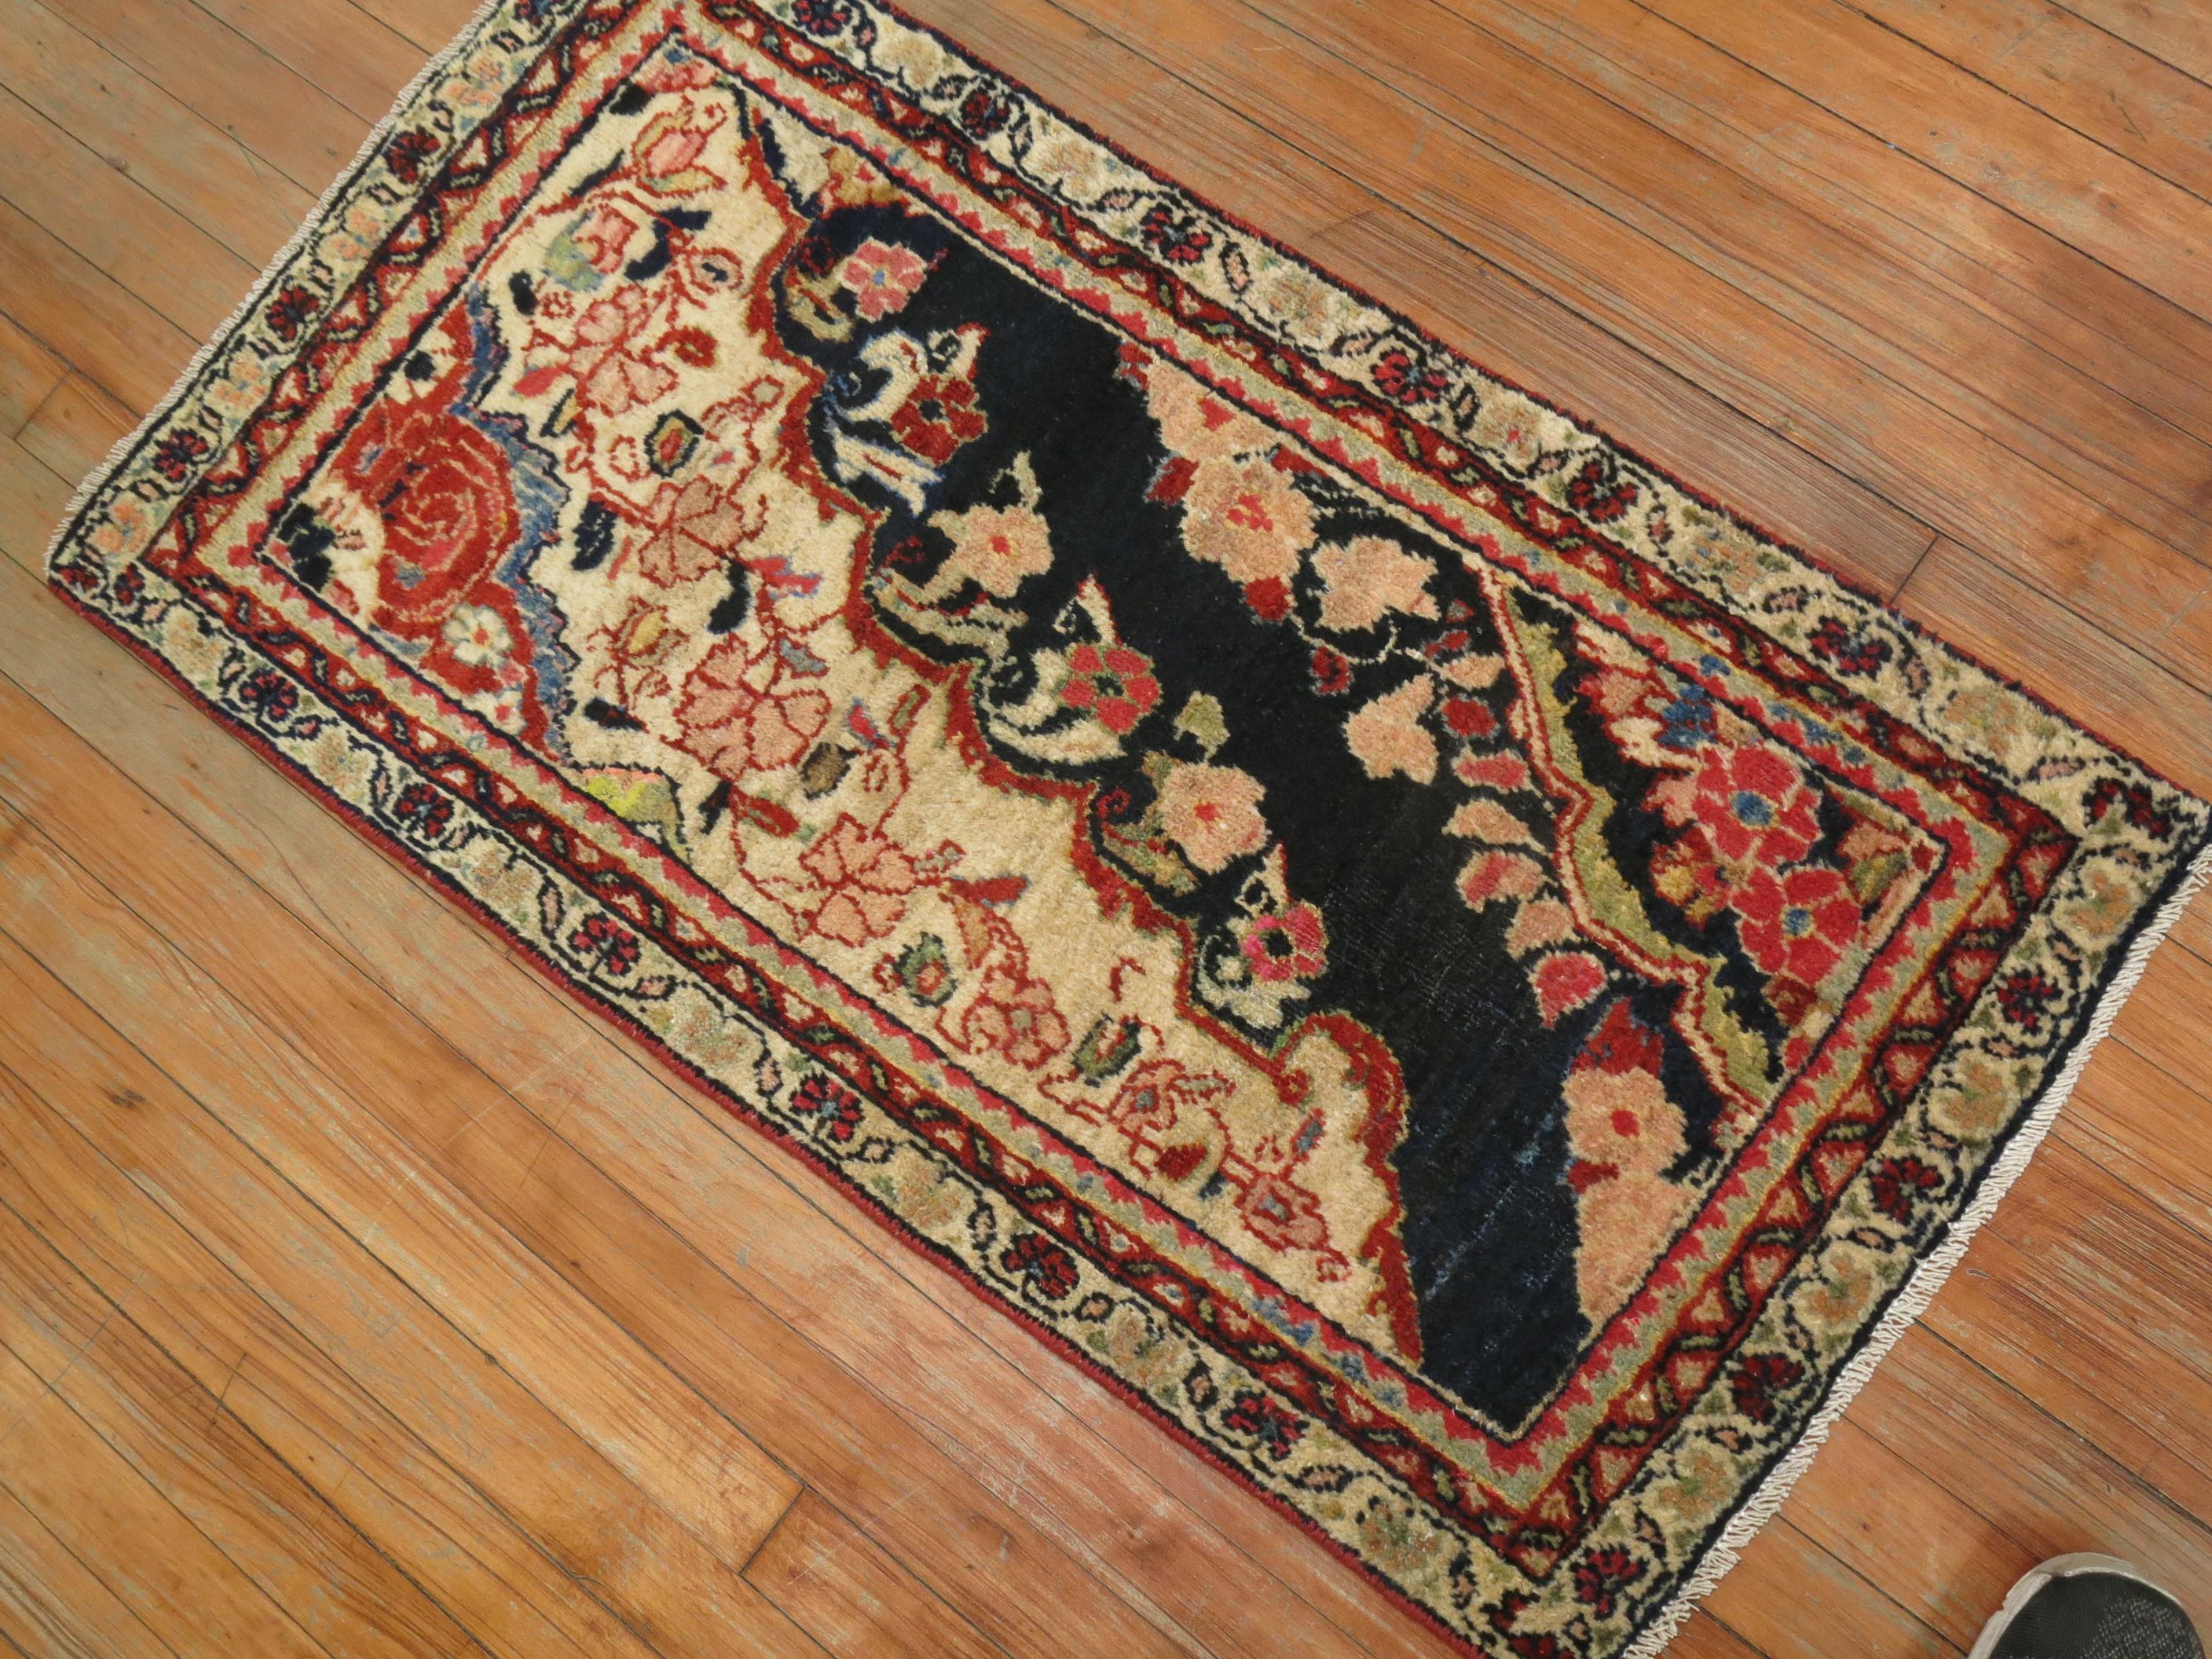 Exquisite frühen 20. Jahrhundert seltene persische Mahal Sampler Teppich.

 